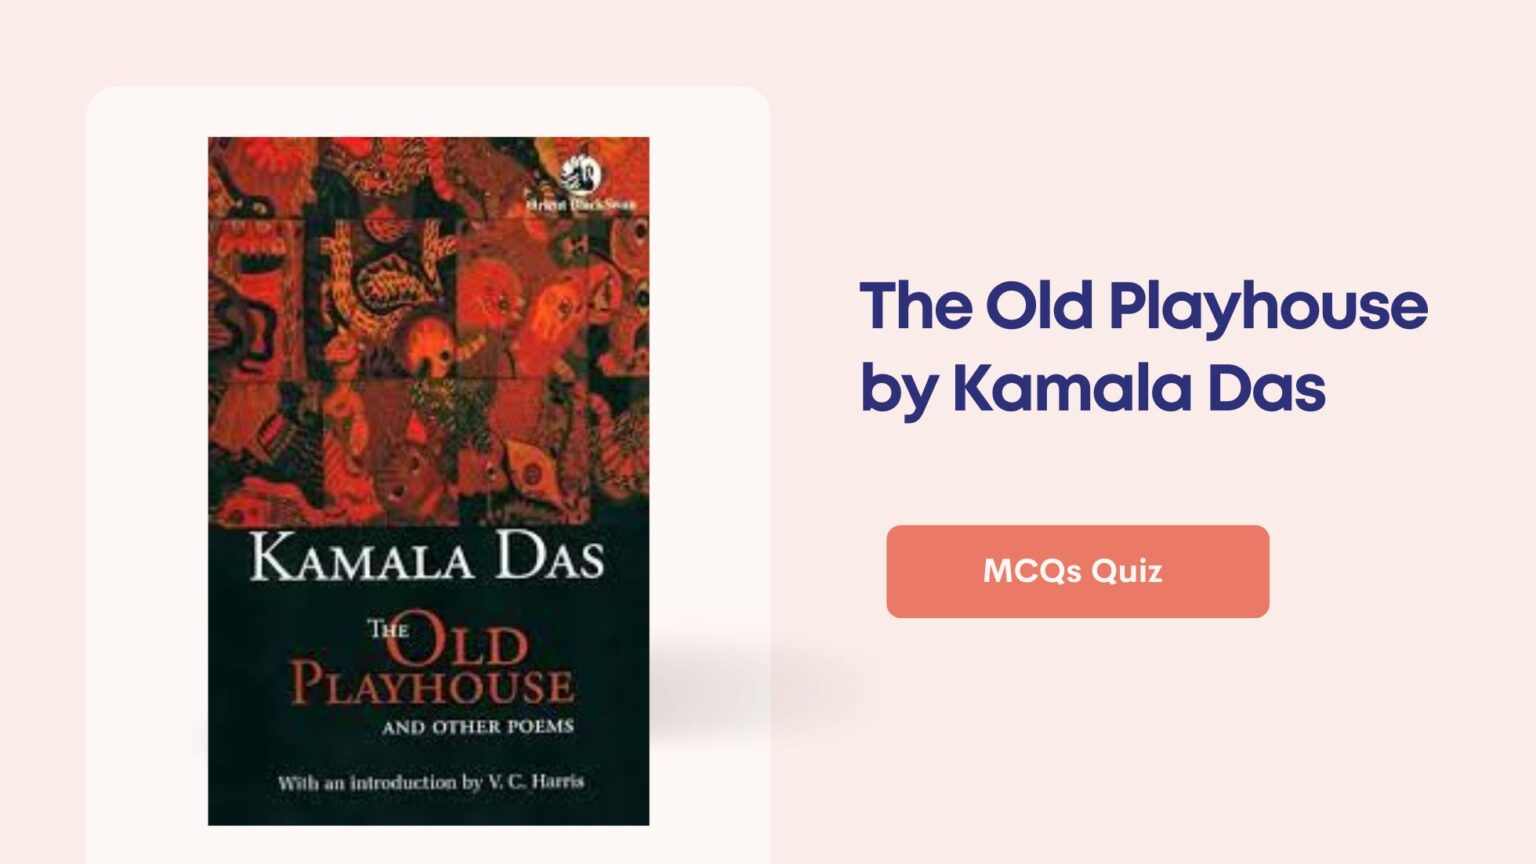 The Old Playhouse by Kamala Dass